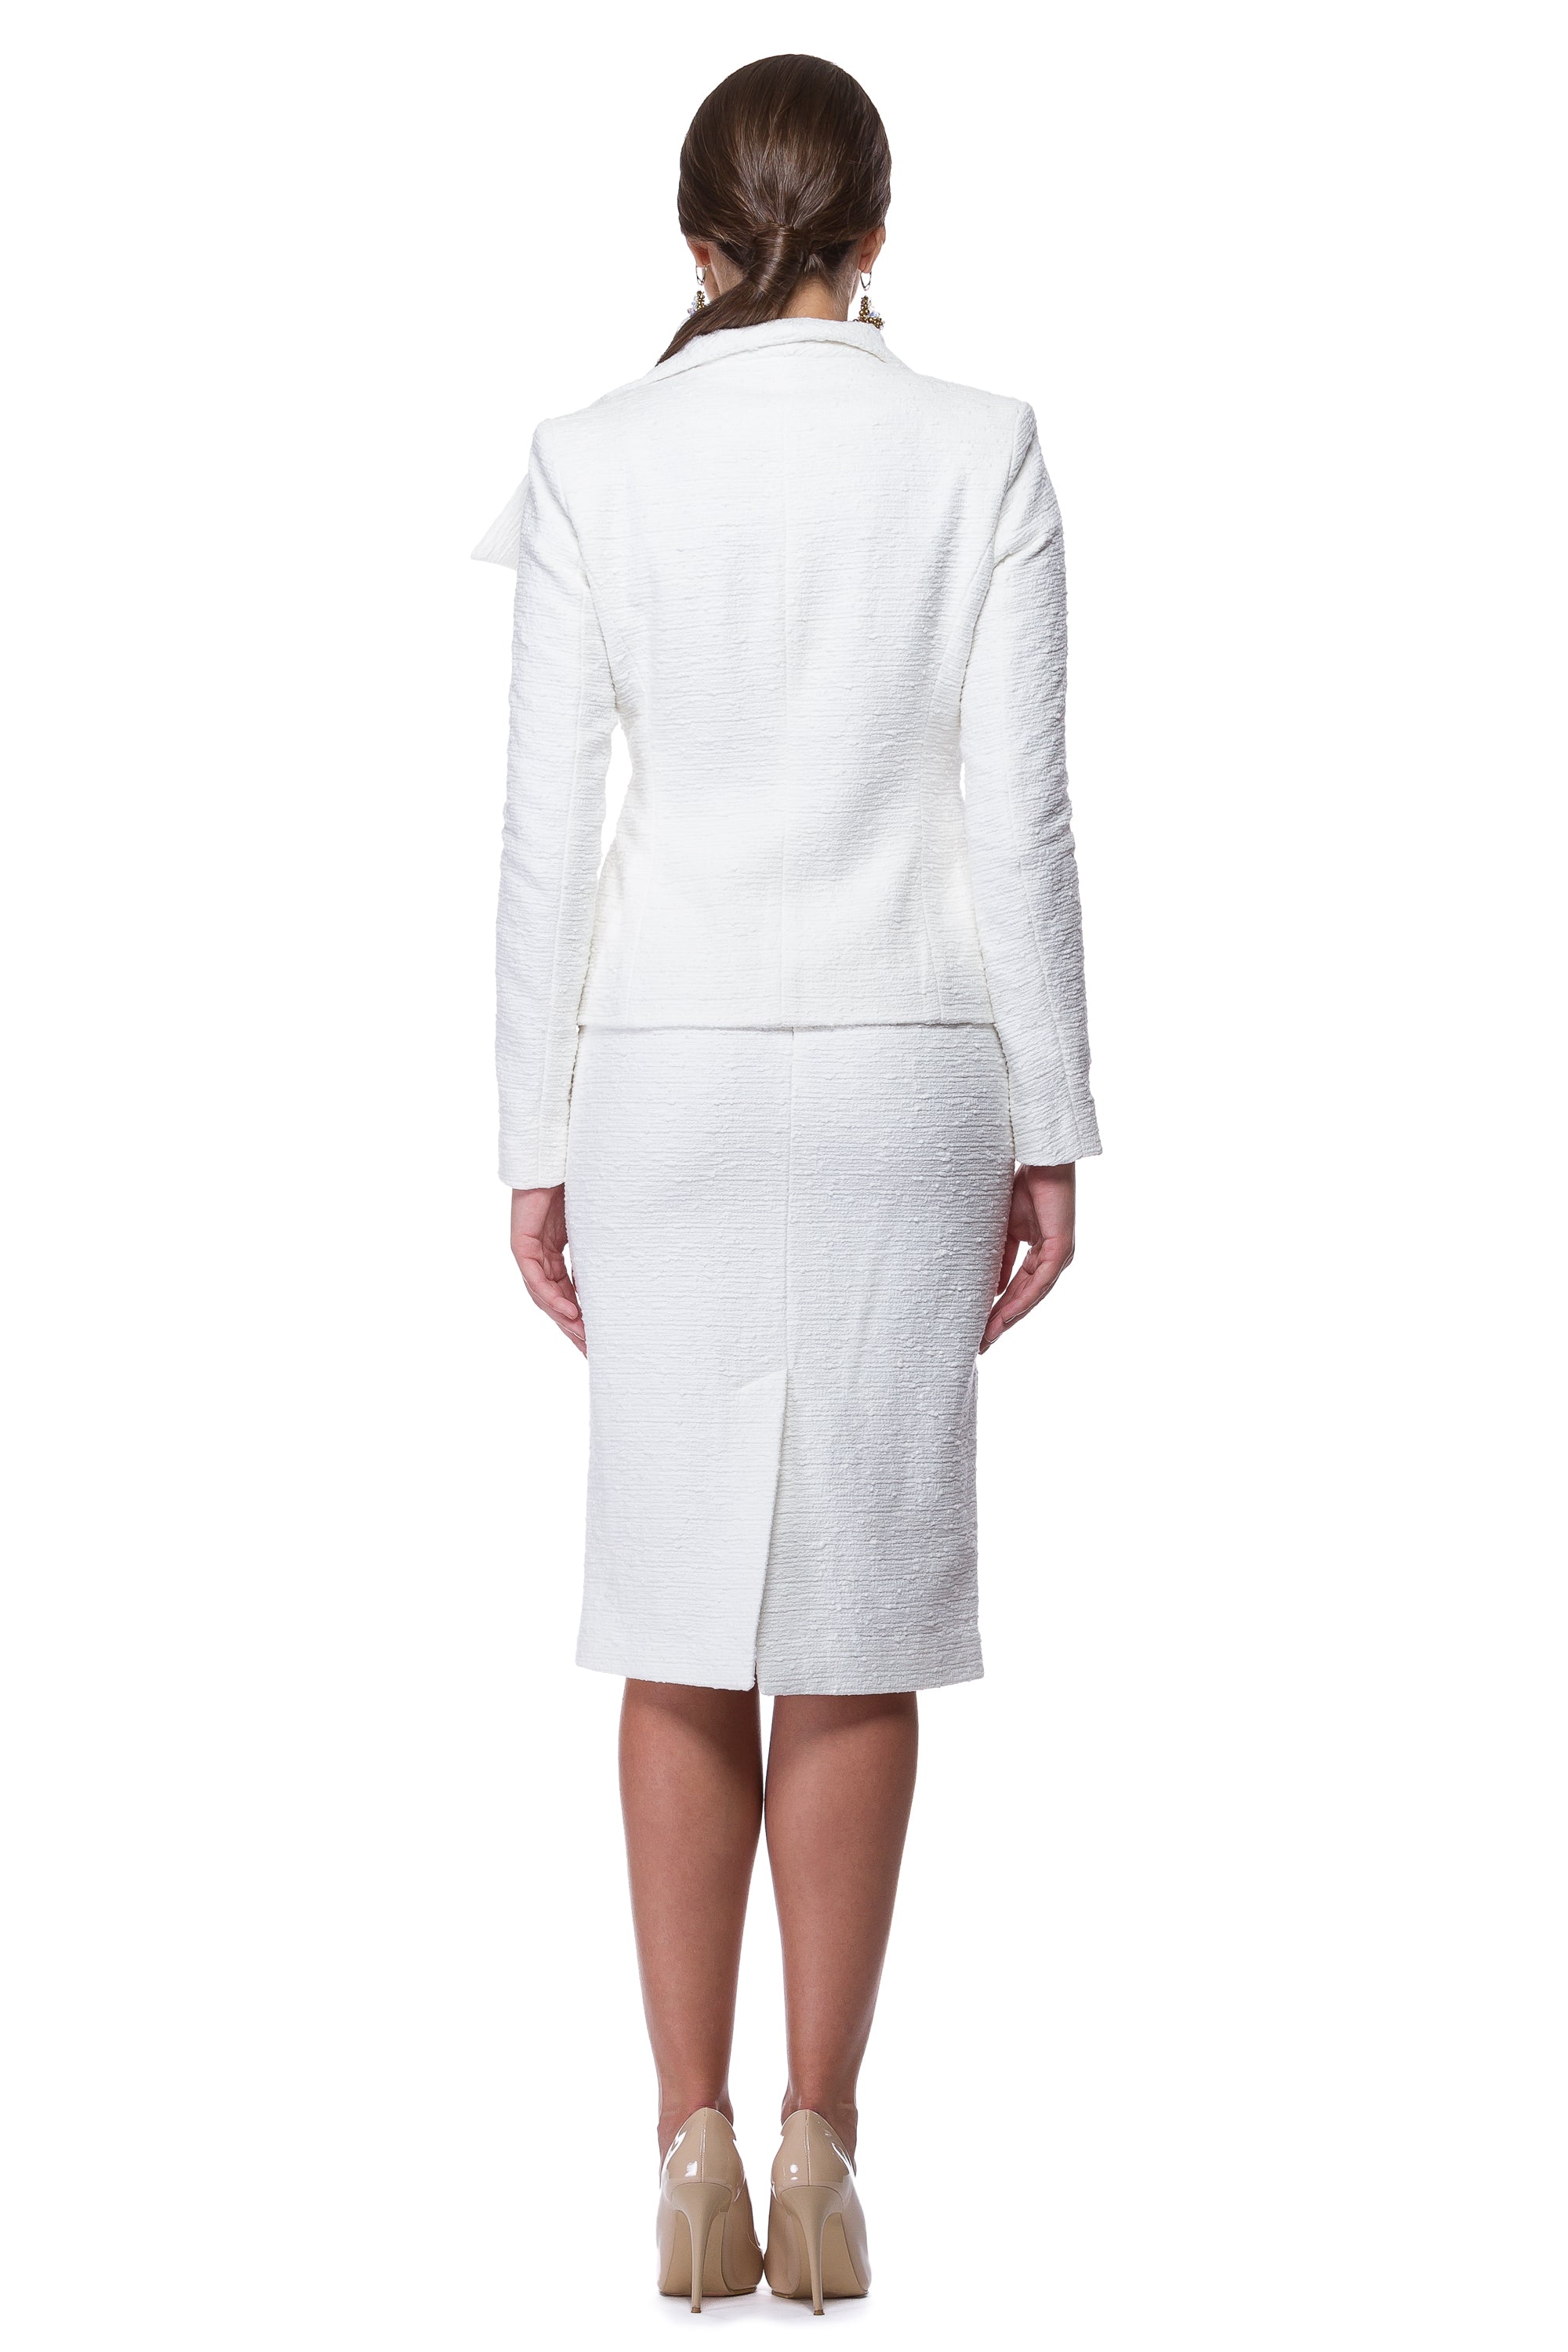 White cotton pencil skirt WSK-0002